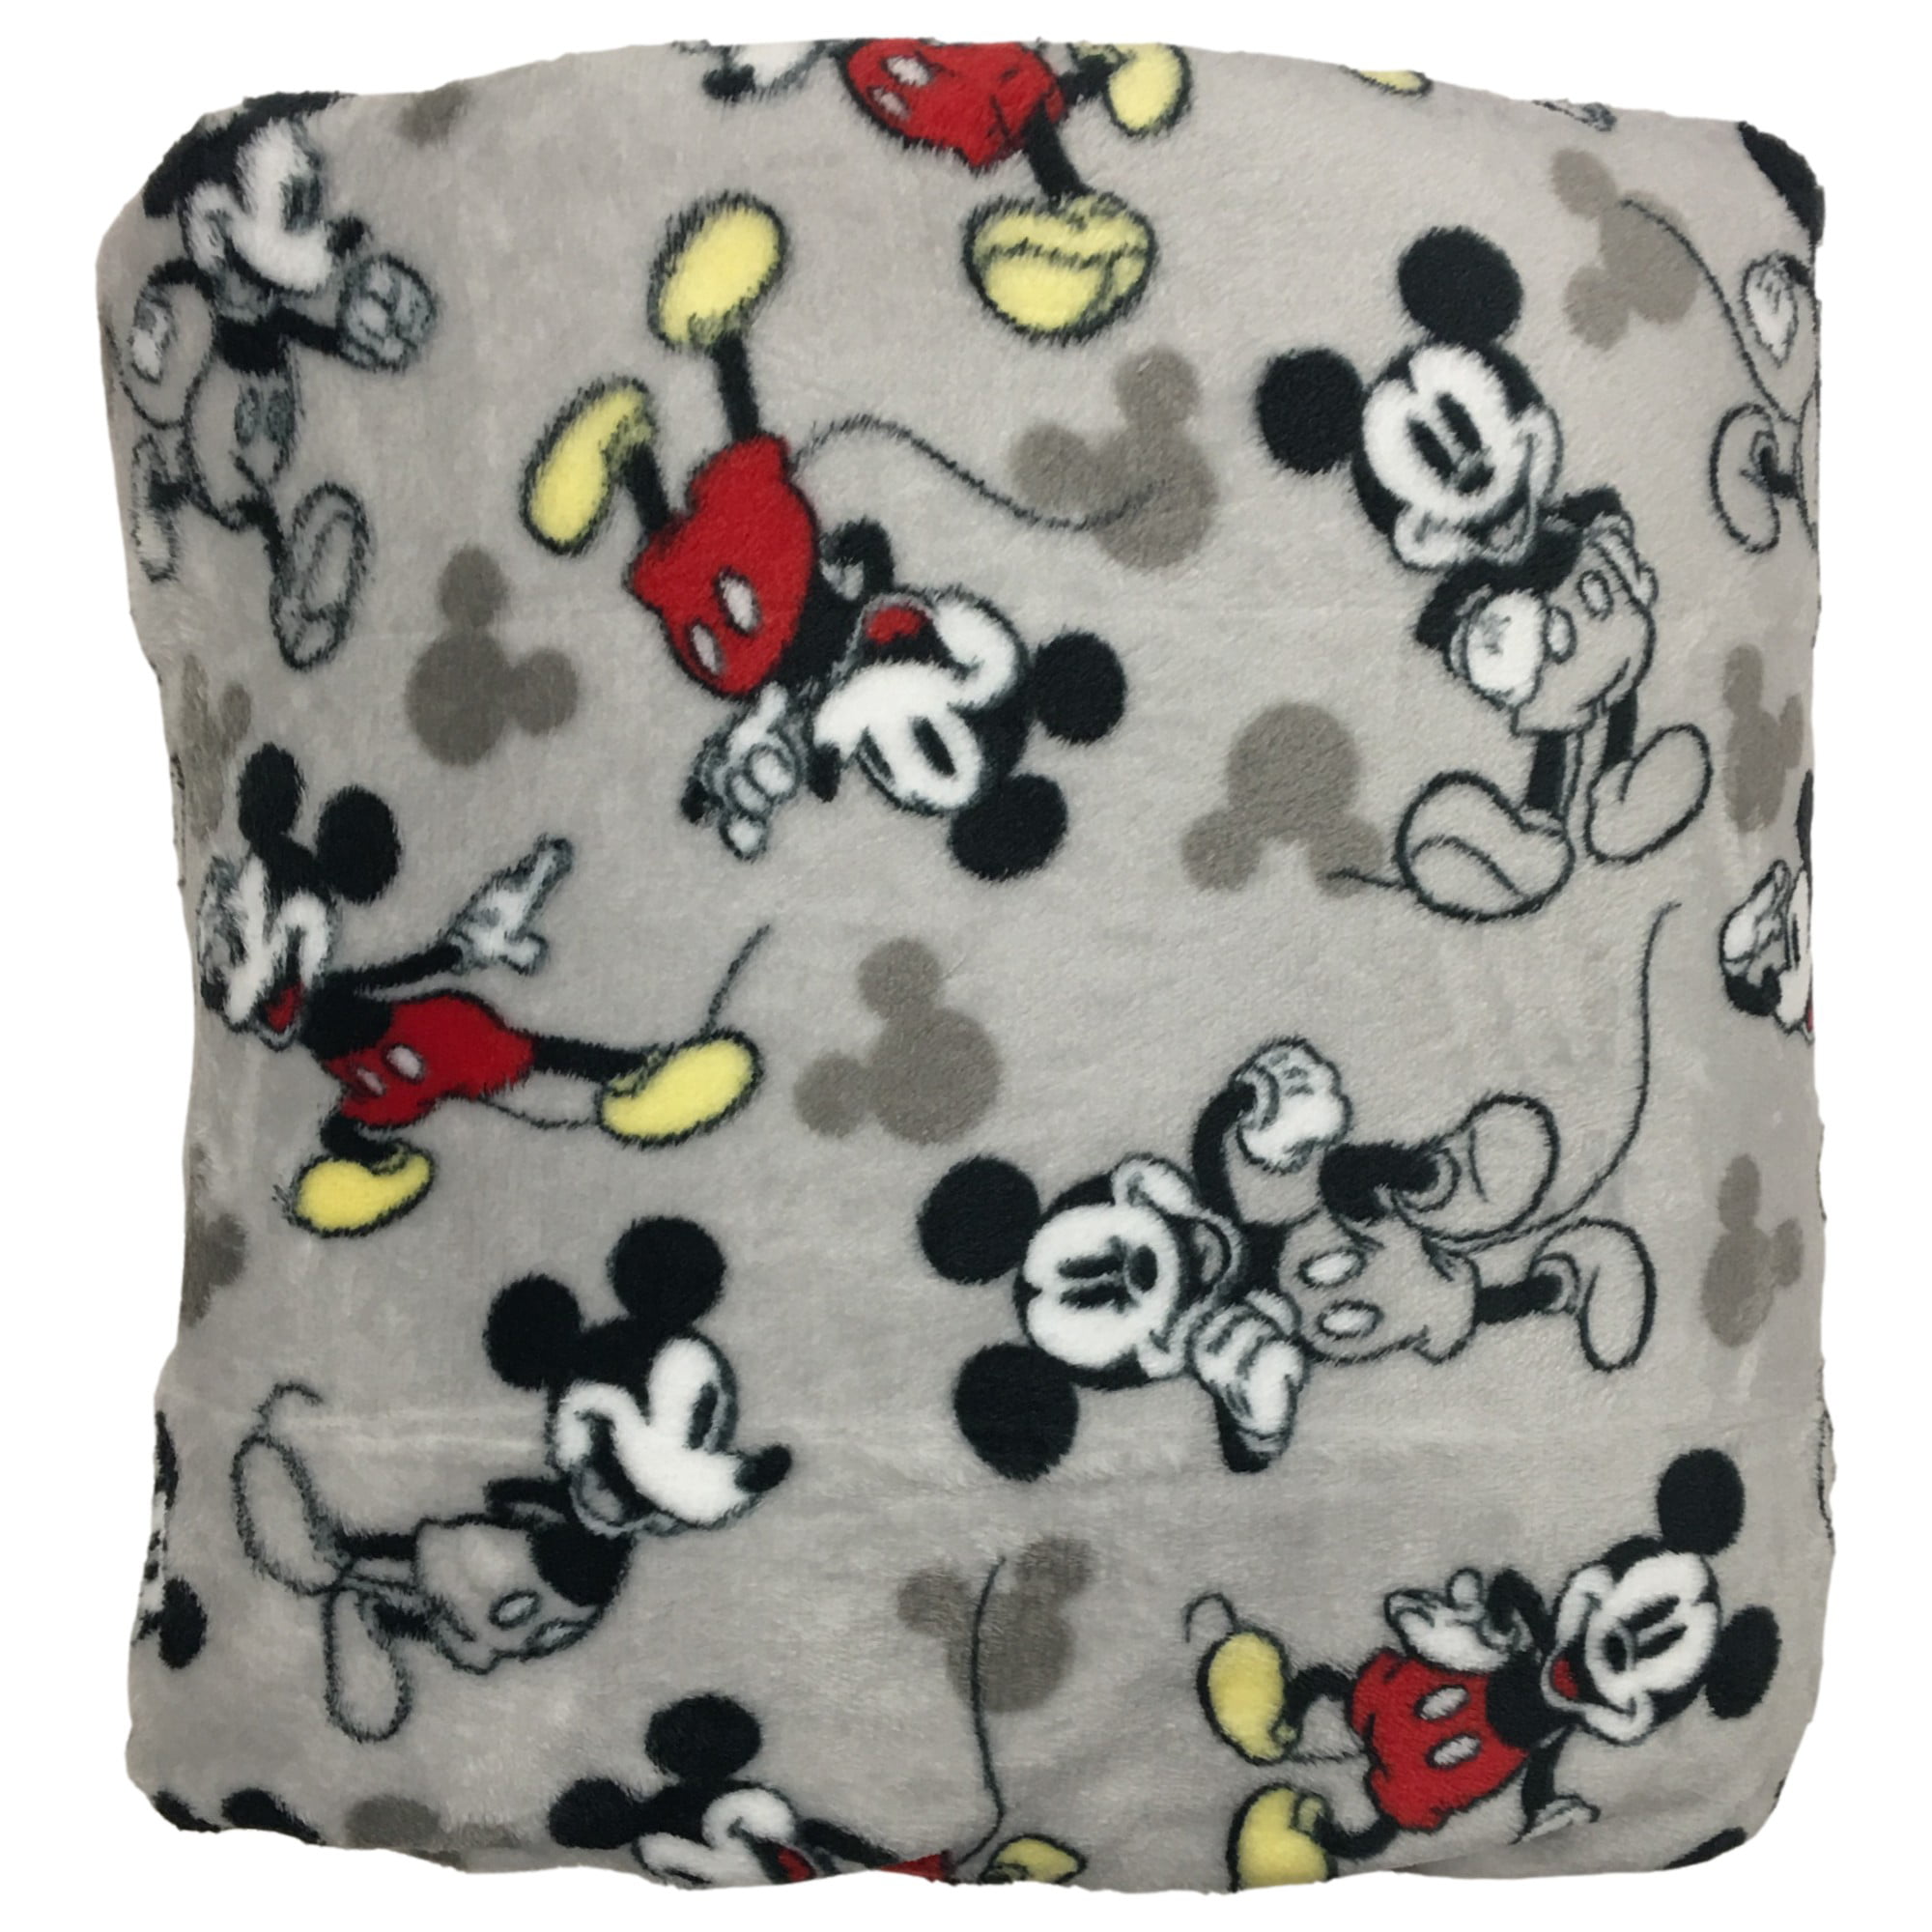 Disneys Mickey Mouse Frames Micro Super Plush Soft Throw Blanket 46 x 60